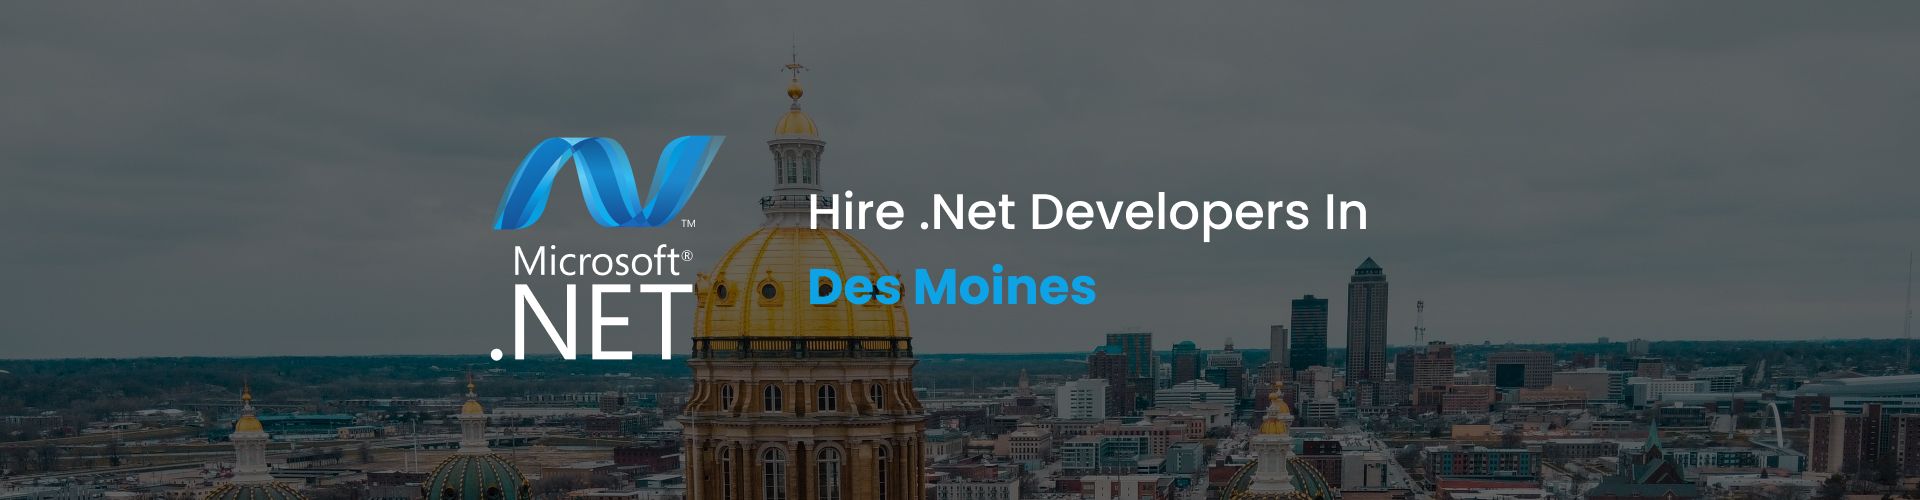 hire .net developers in des moines